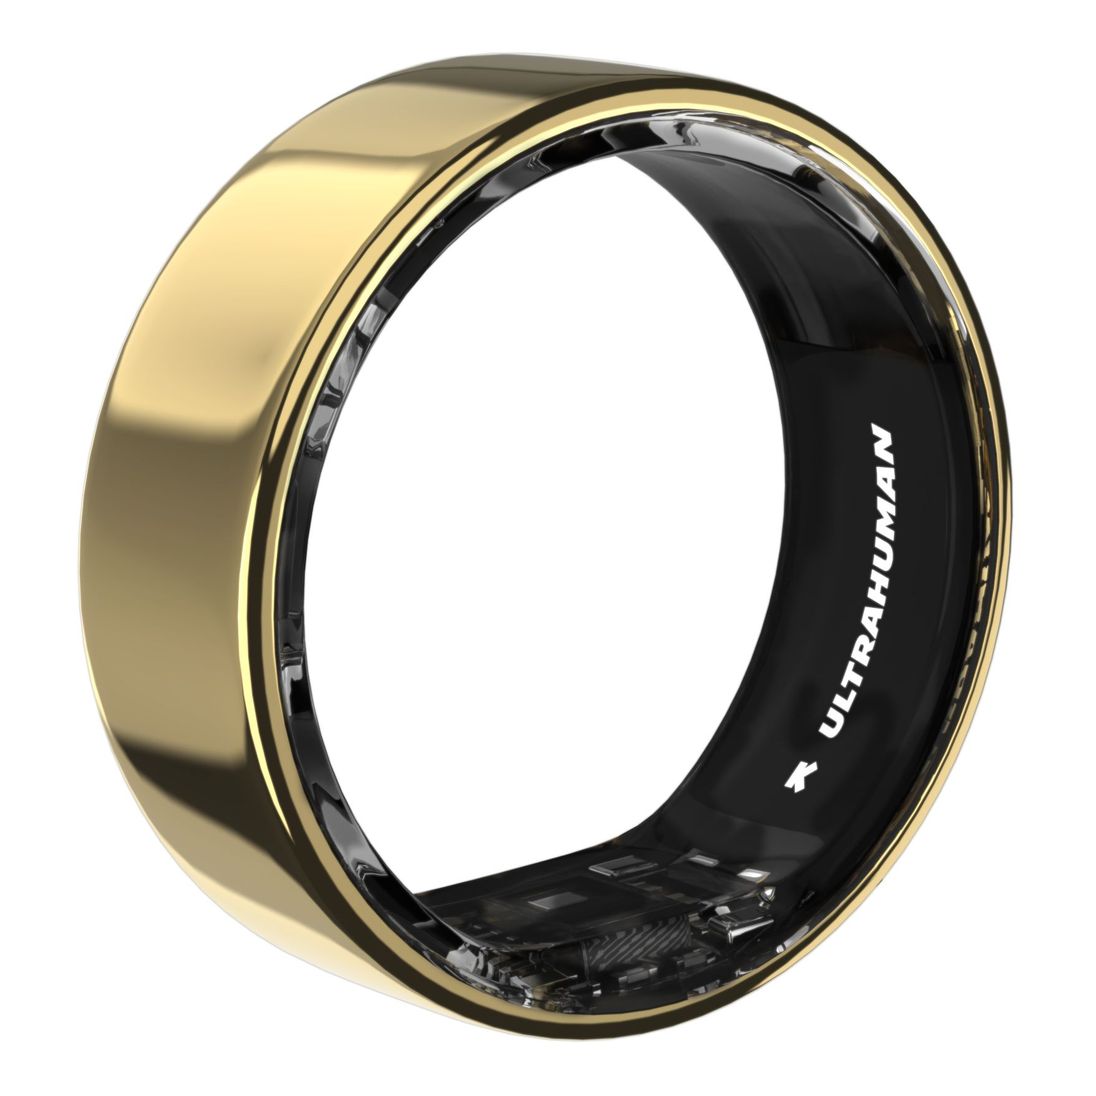 Ultrahuman Ring AIR Smart Ring - Size 7 - Bionic Gold